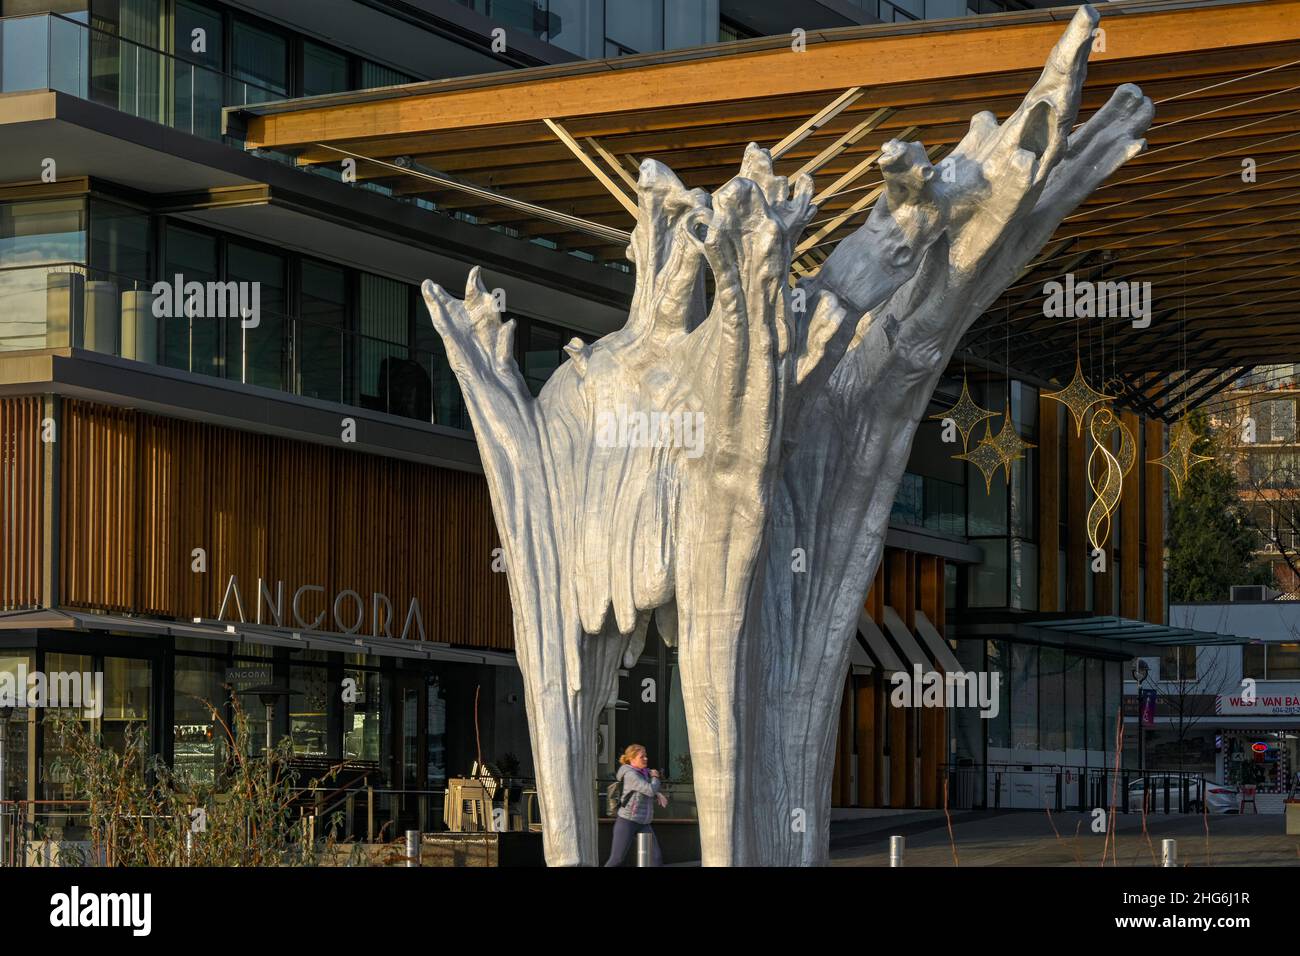 https://c8.alamy.com/comp/2HG6J1R/tree-snag-public-art-sculpture-by-douglas-coupland-ambleside-west-vancouver-british-columbia-canada-2HG6J1R.jpg